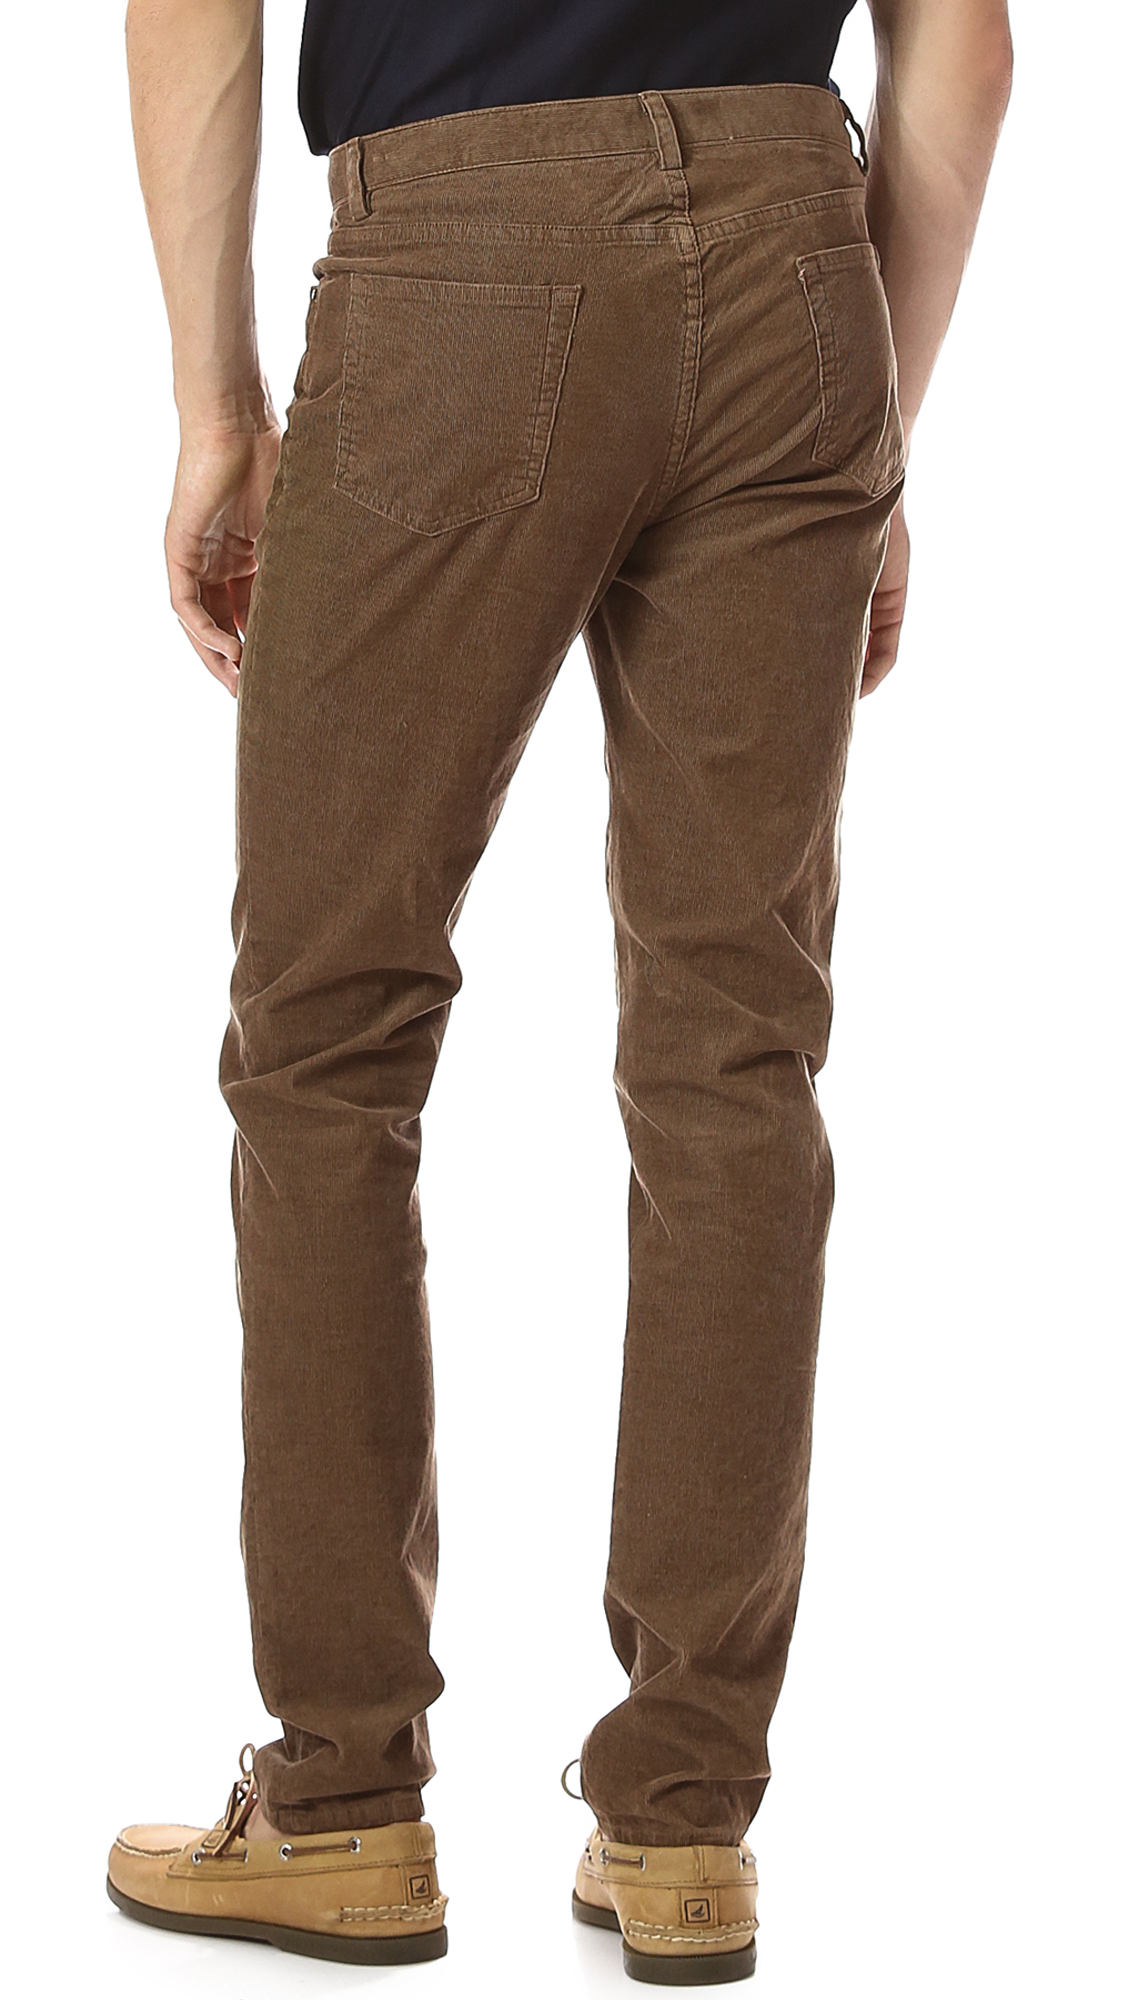 Vince 5 Pocket Corduroy Jeans in Tobacco (Brown) for Men - Lyst